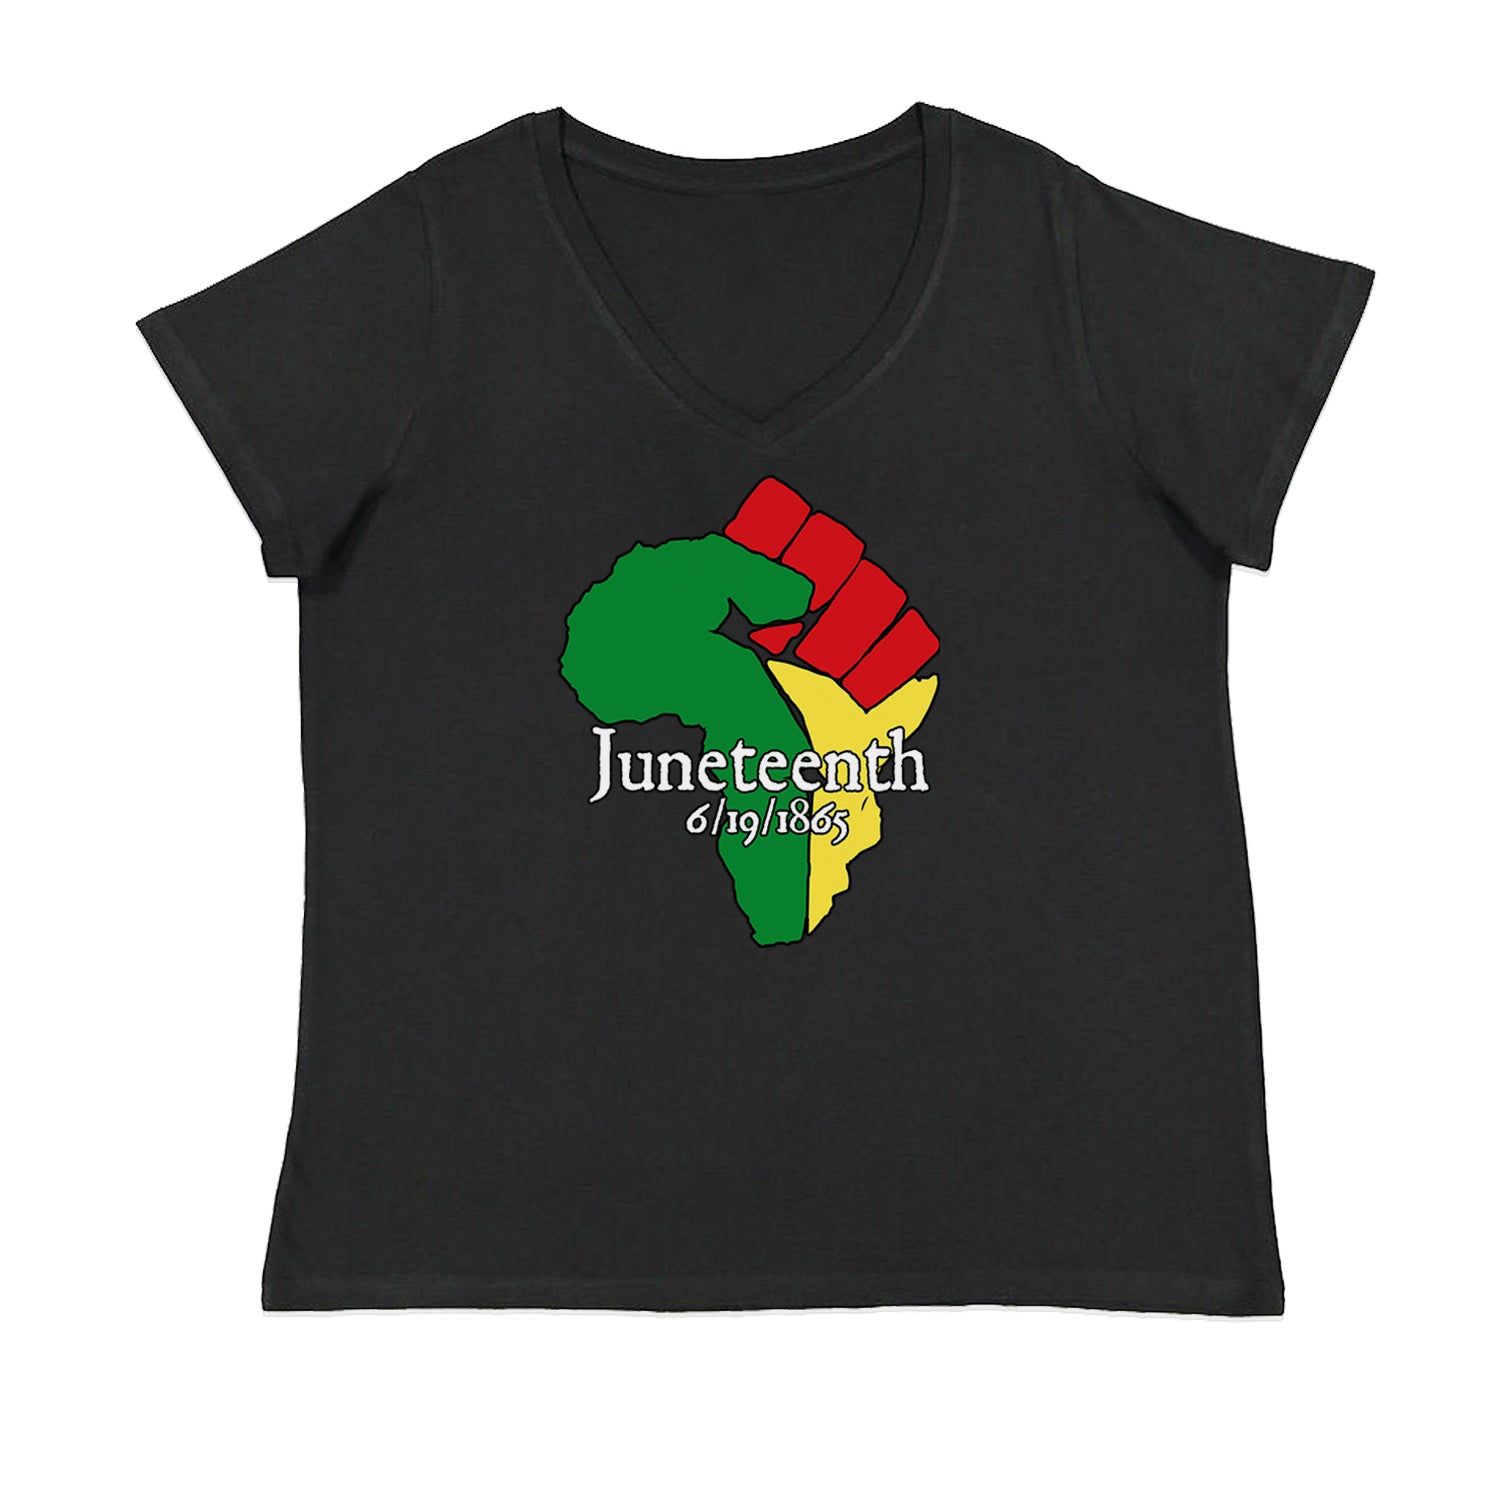 Juneteenth Raised Fist Africa Celebrate Emancipation Day Womens Plus Size V-Neck T-shirt